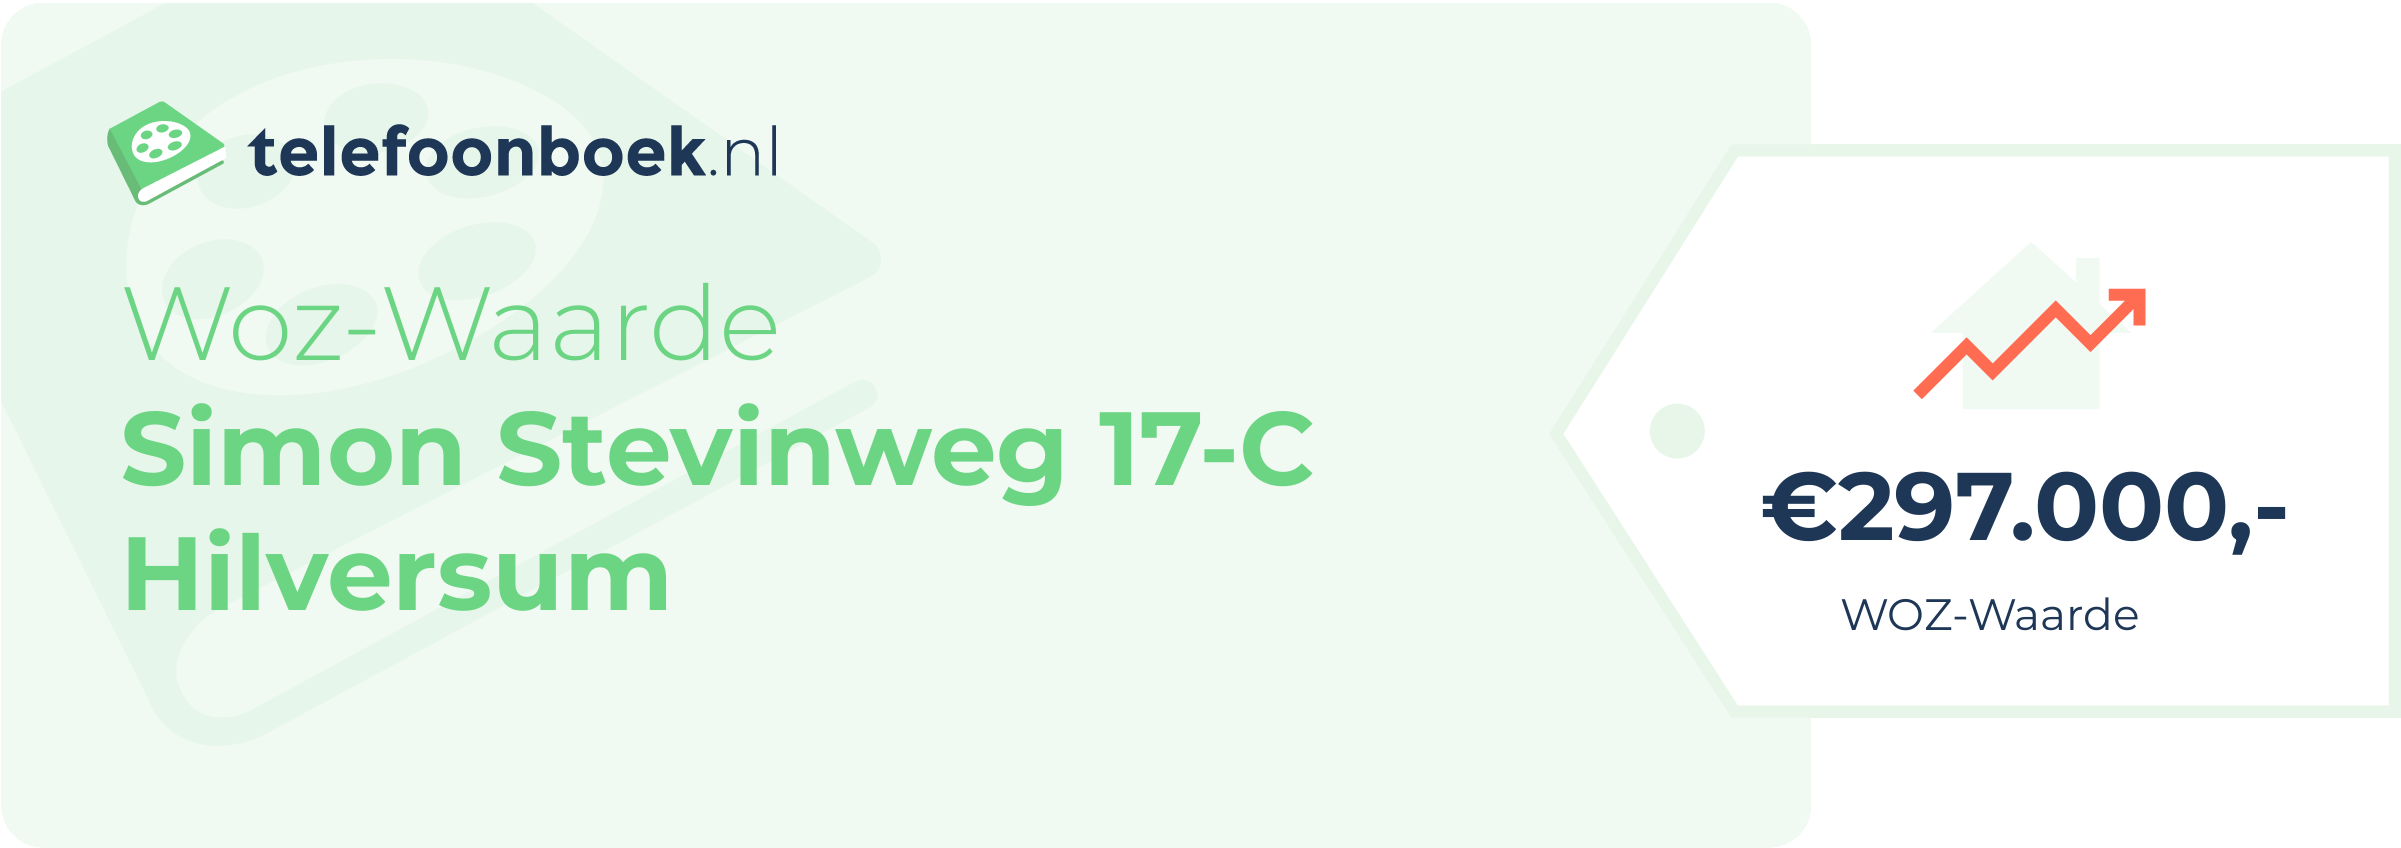 WOZ-waarde Simon Stevinweg 17-C Hilversum